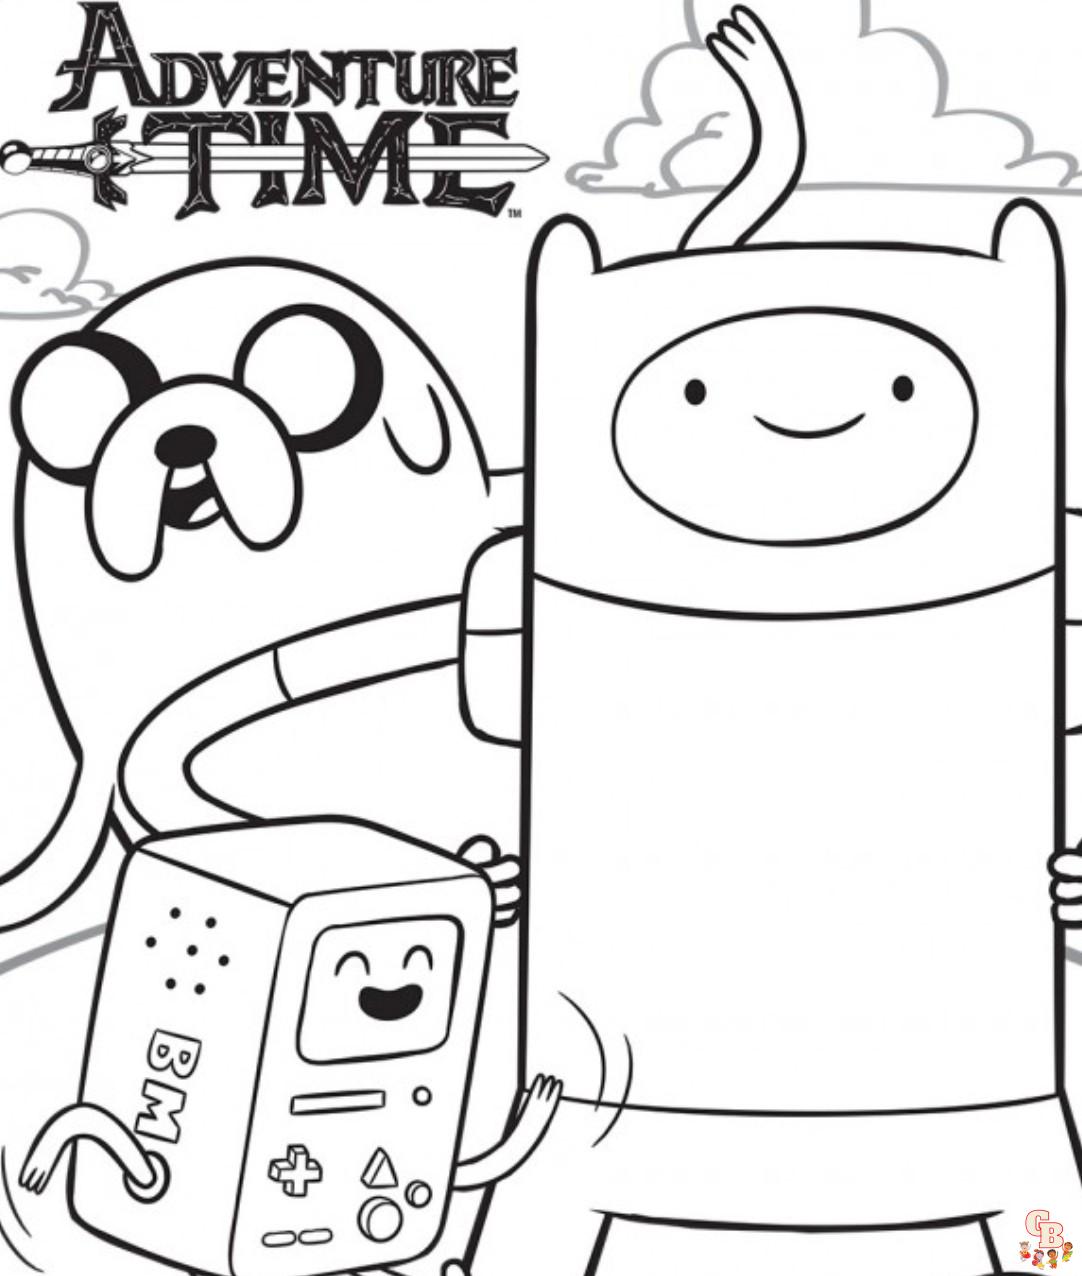 Adventure time kleurplaten 7